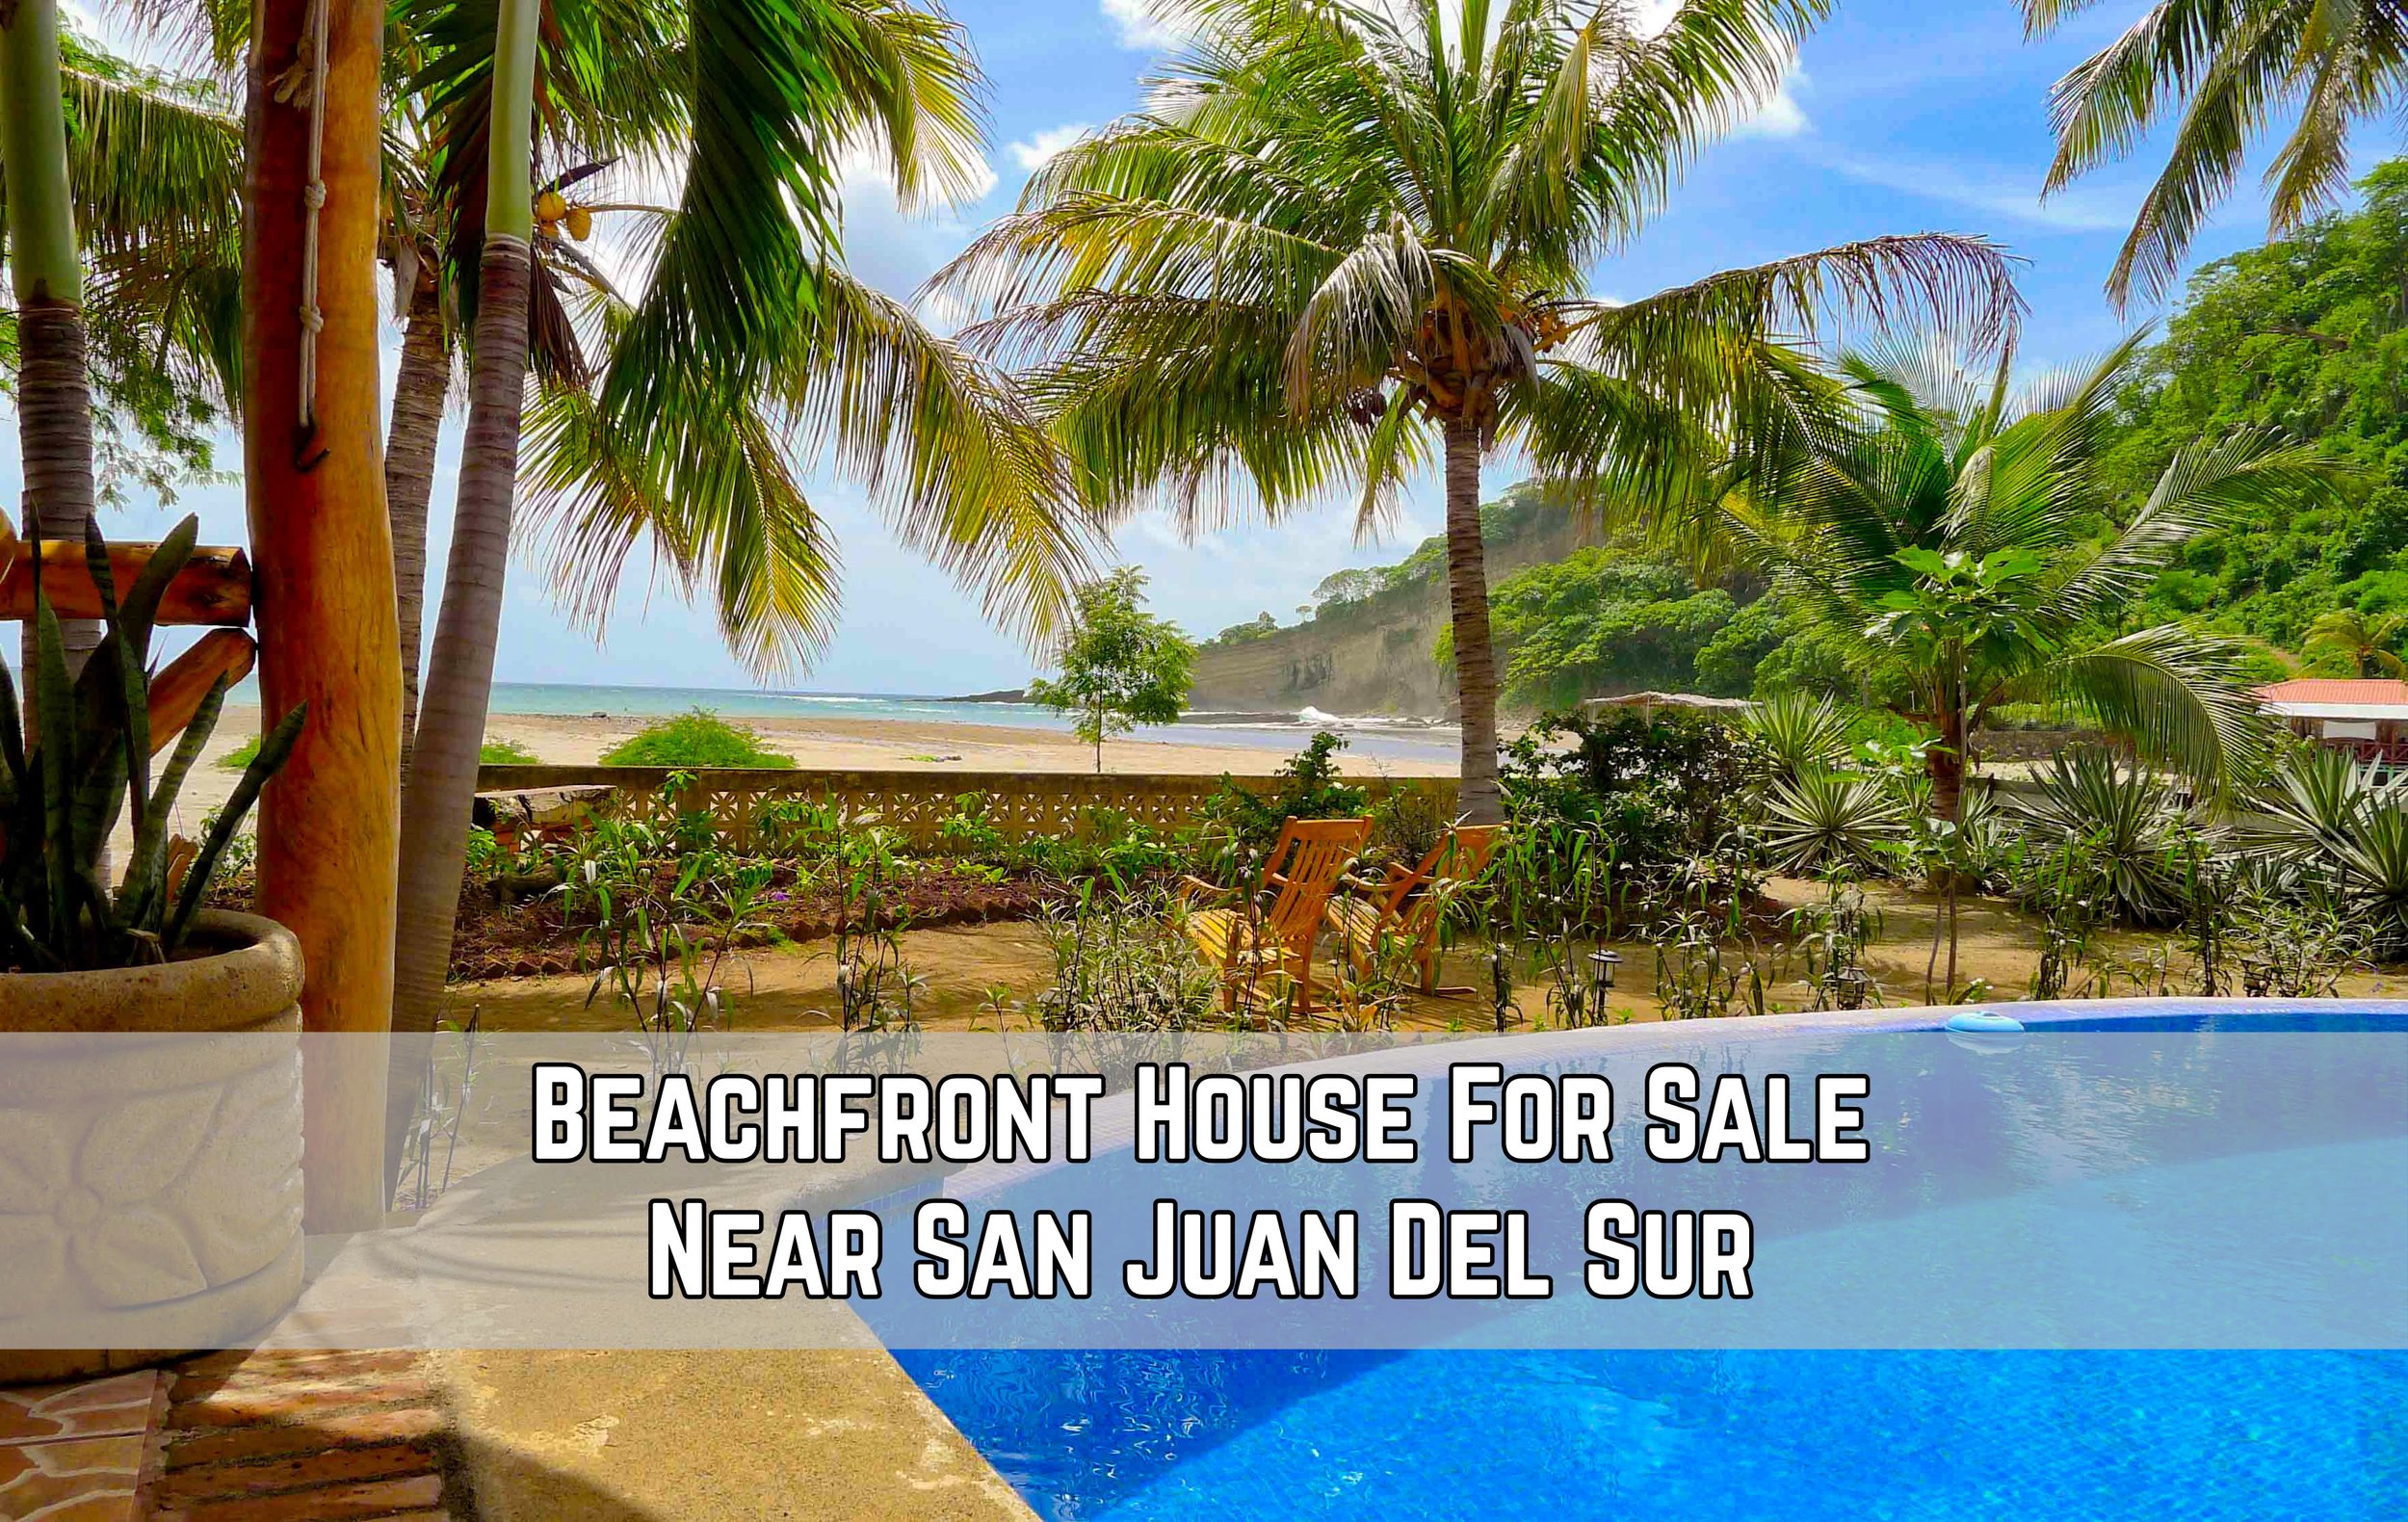 Beachfront Property For Sale San Juan Del Sur Nicaragua.jpg